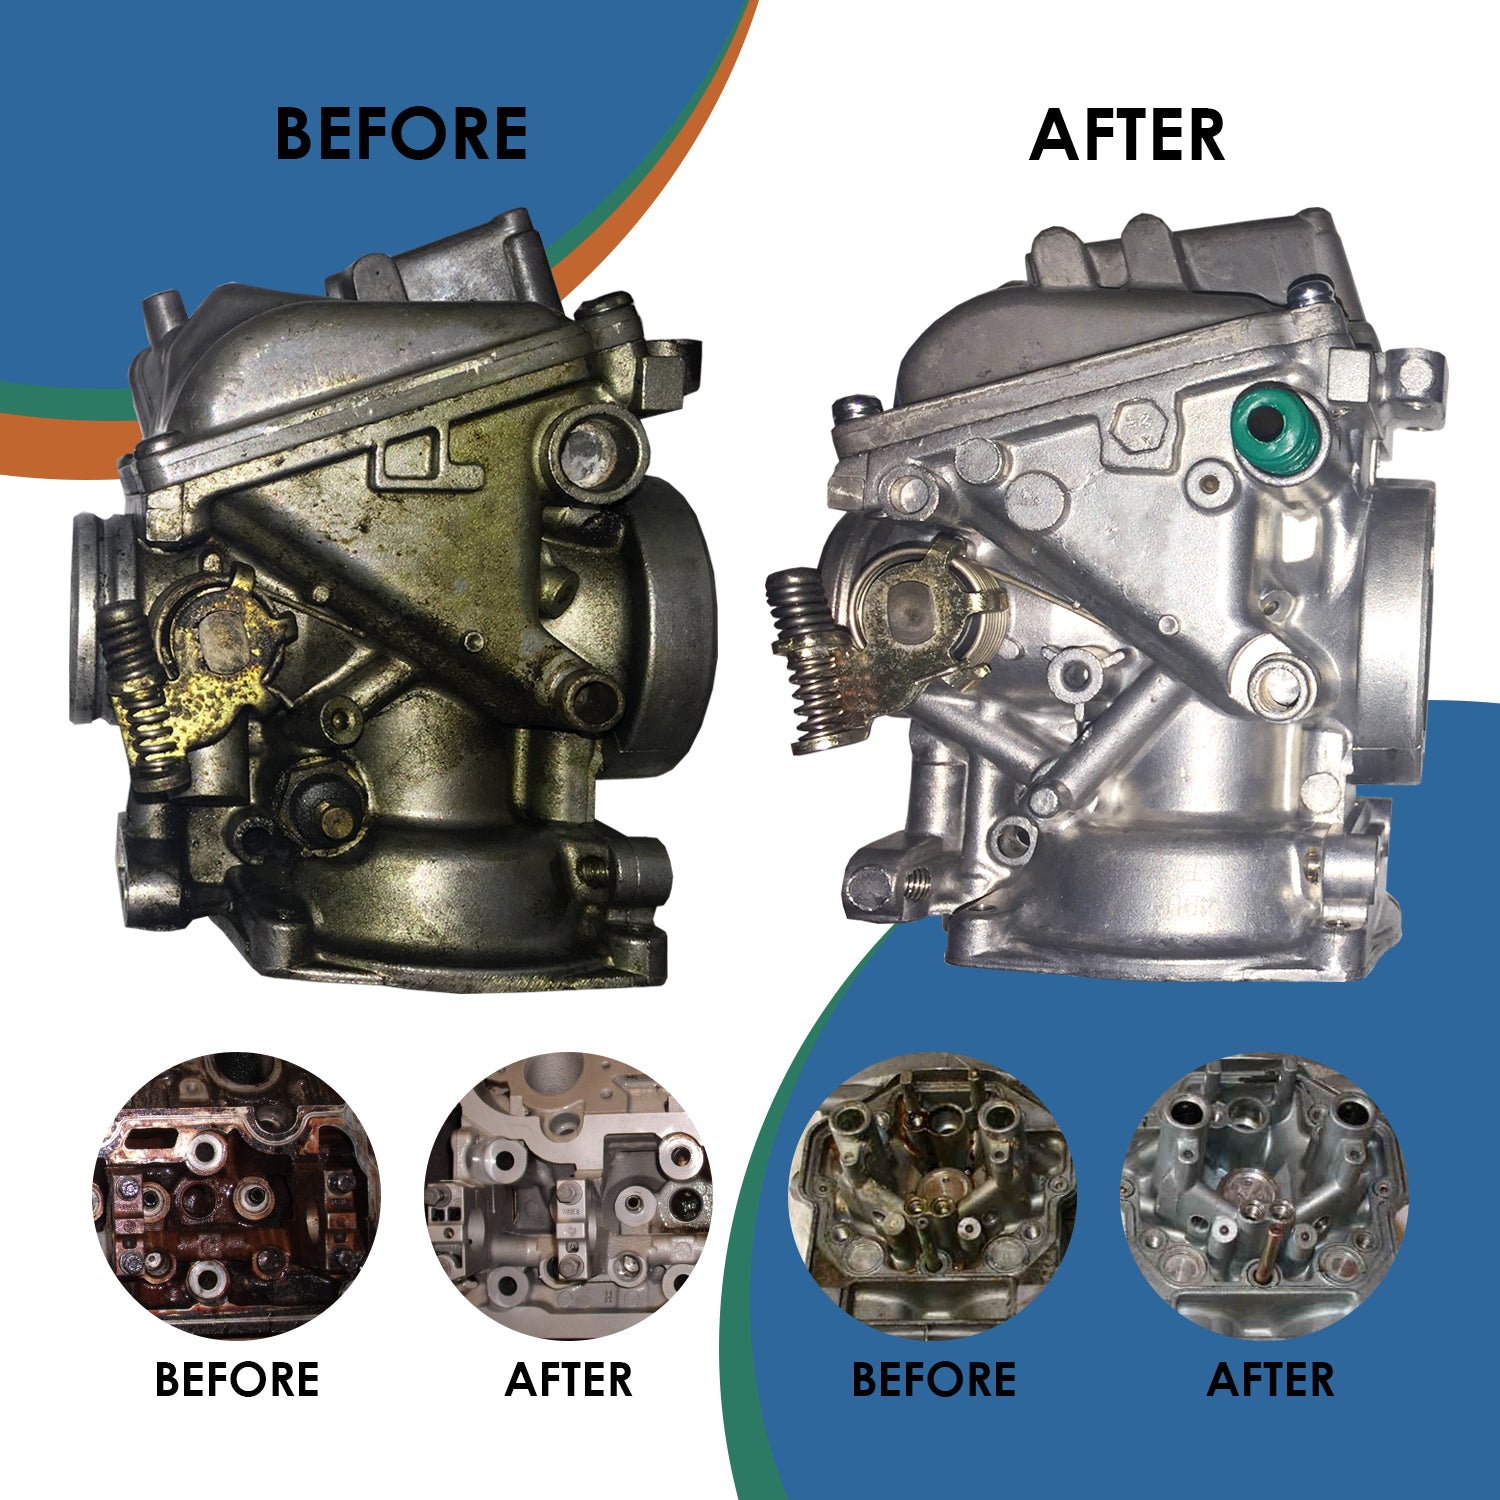 Best Ultrasonic Cleaner Solution For Carburetor – Northwest Enterprises, LLC